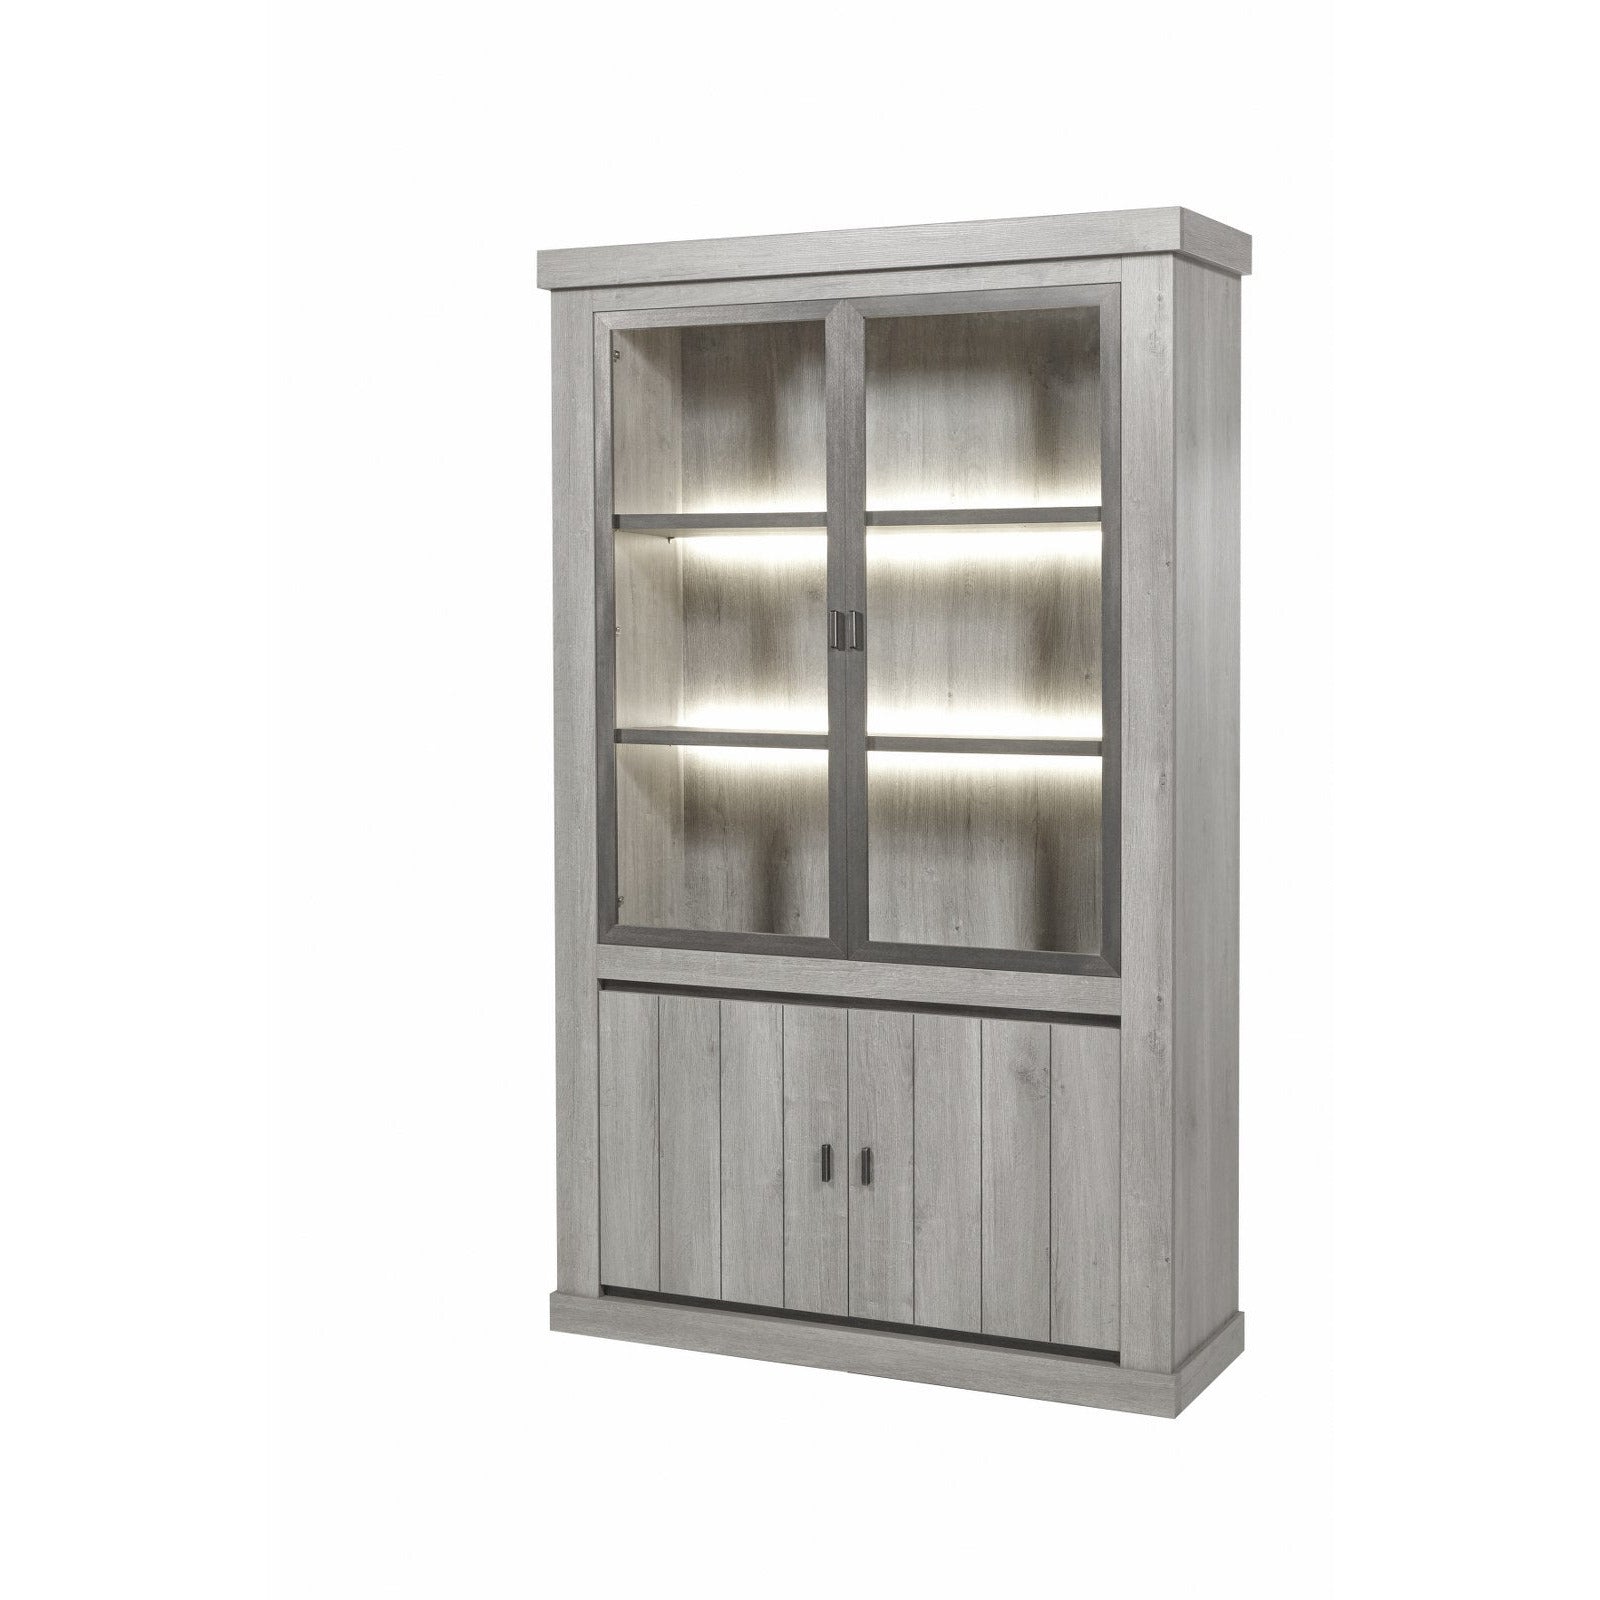 Display cabinet | Furniture series Coupé | natural, gray, black